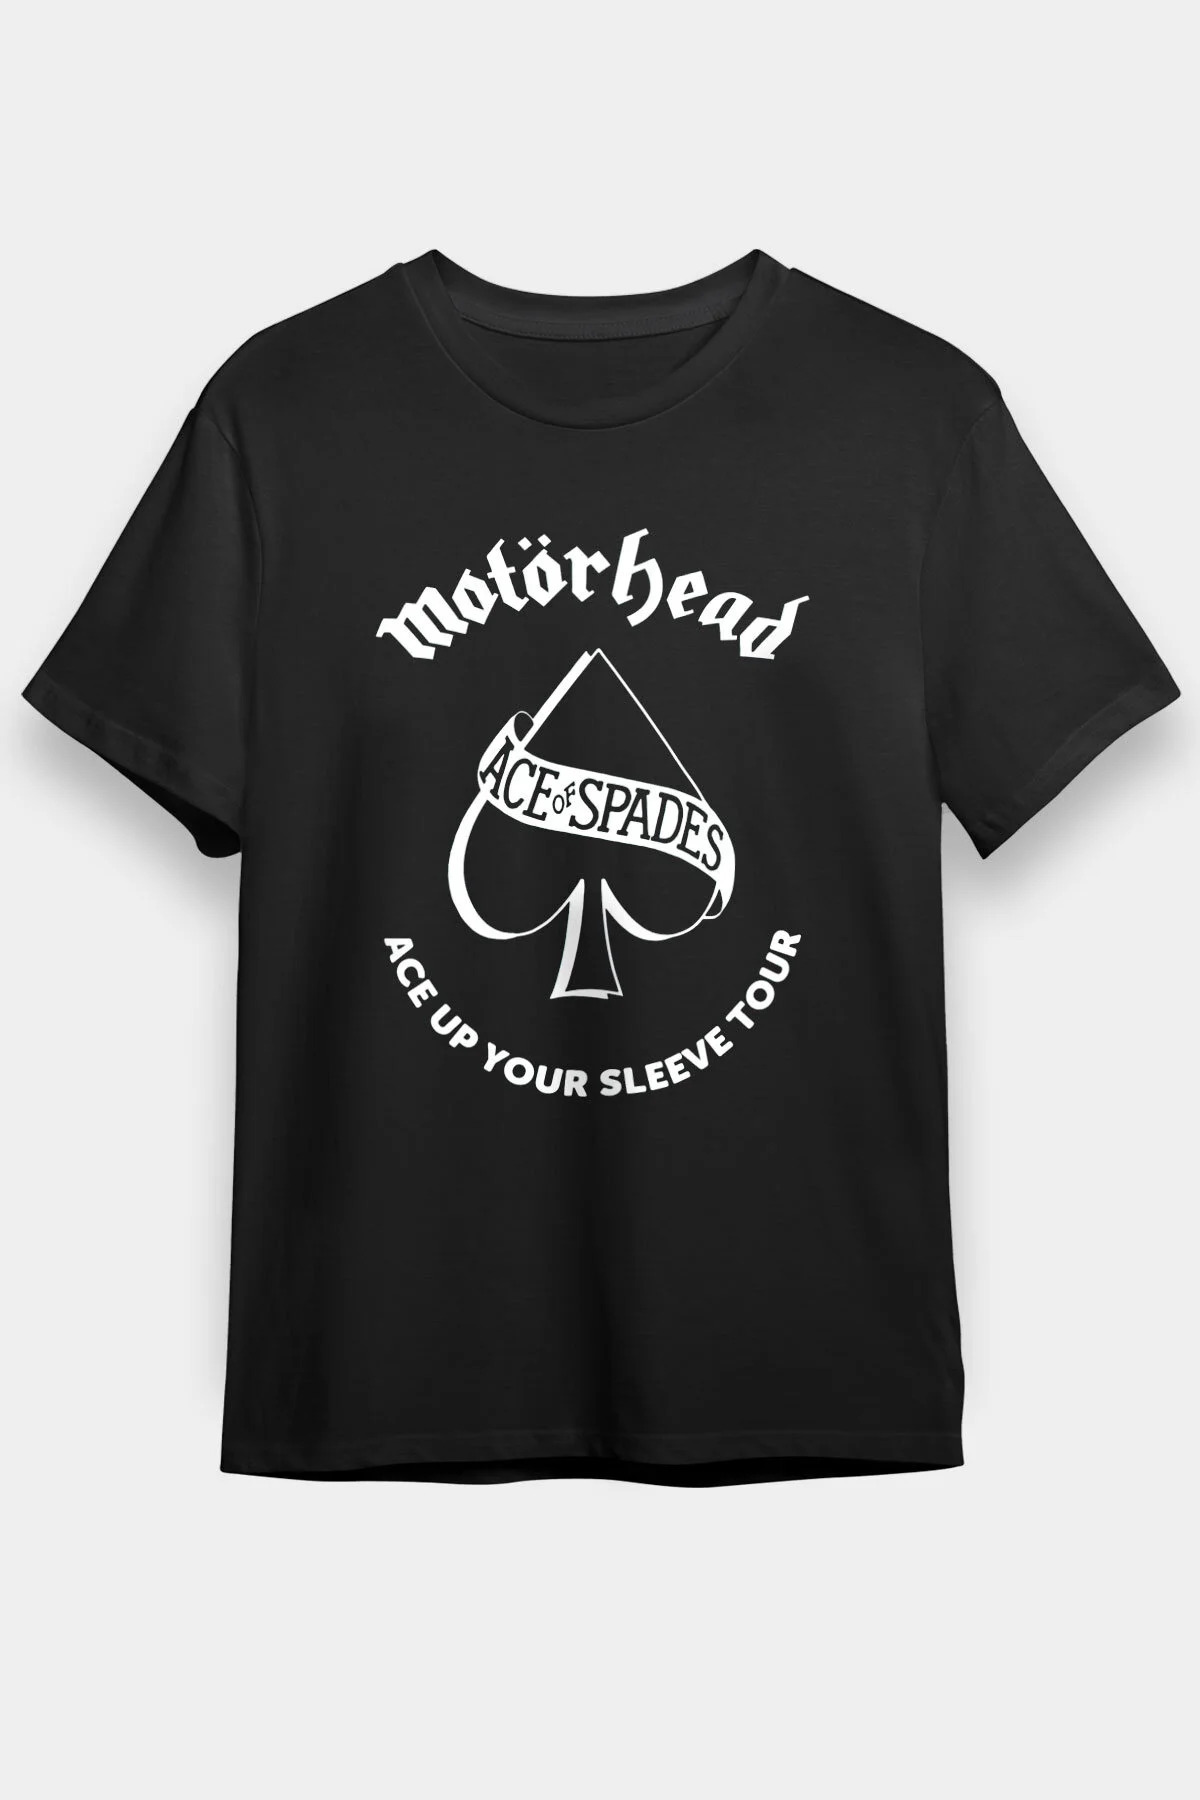 Motörhead T shirt, Music Band ,Unisex Tshirt  15/